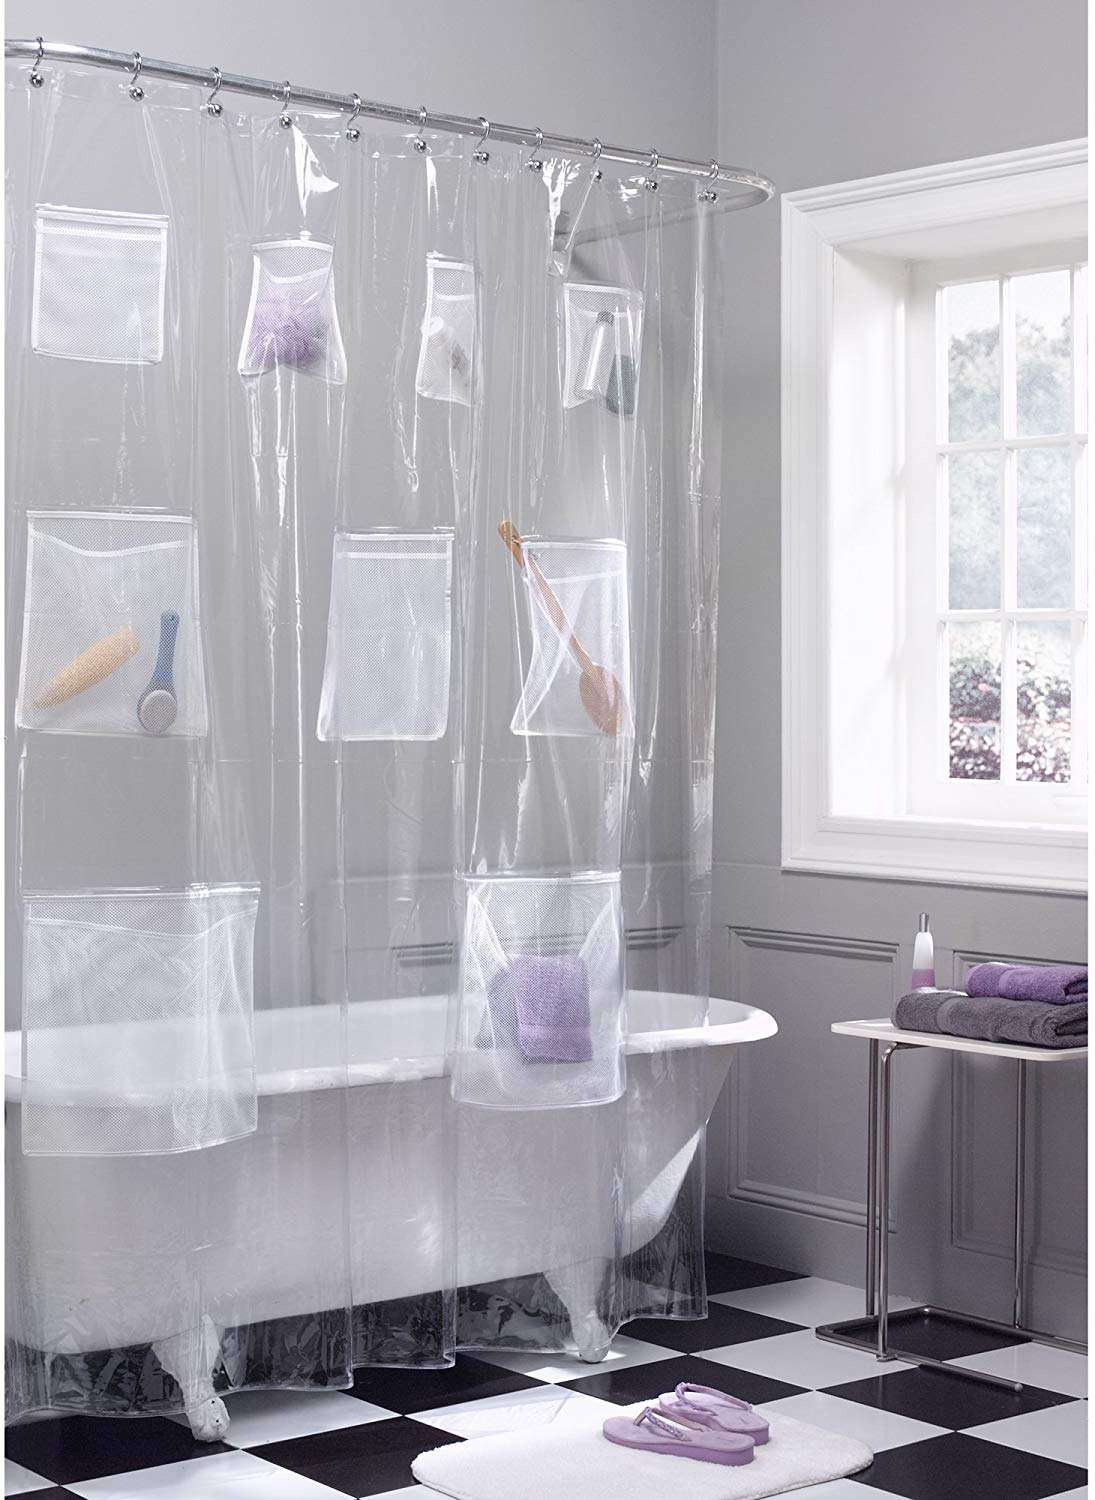 Maytex Quick Dry Mesh Pockets Waterproof PEVA Shower Curtain